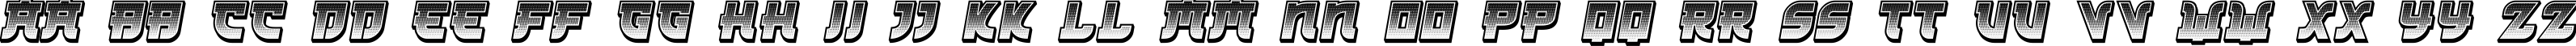 Пример написания английского алфавита шрифтом Kamikaze 3D Gradient Italic